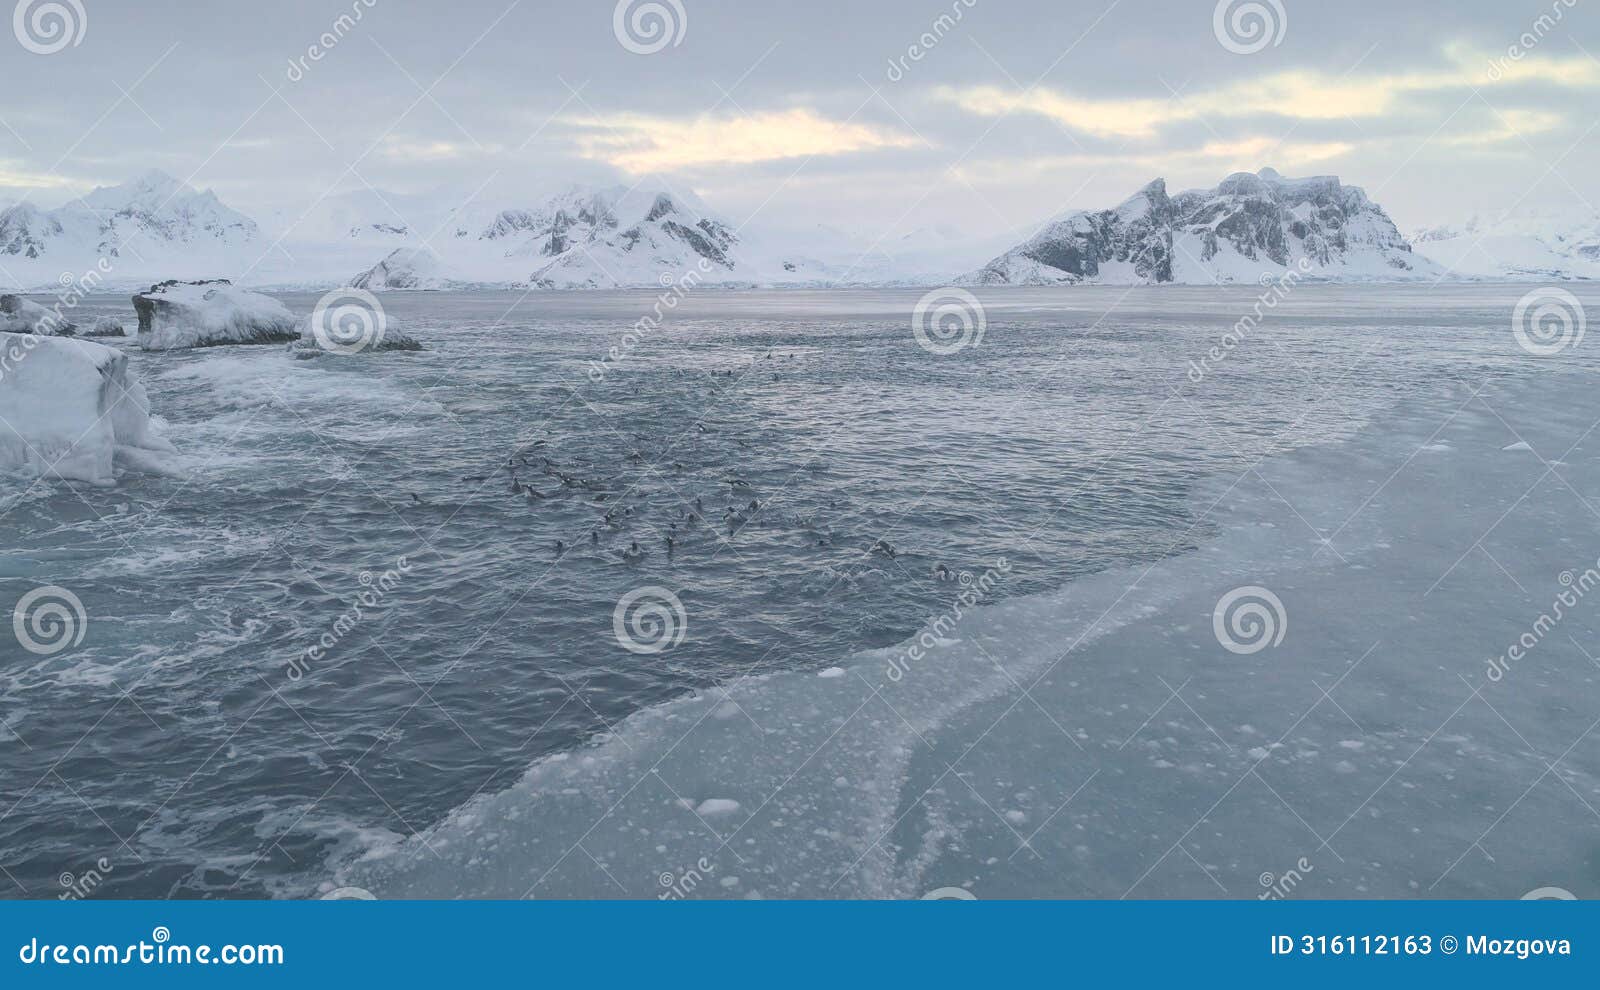 gentoo penguin group swim antarctic brash ice